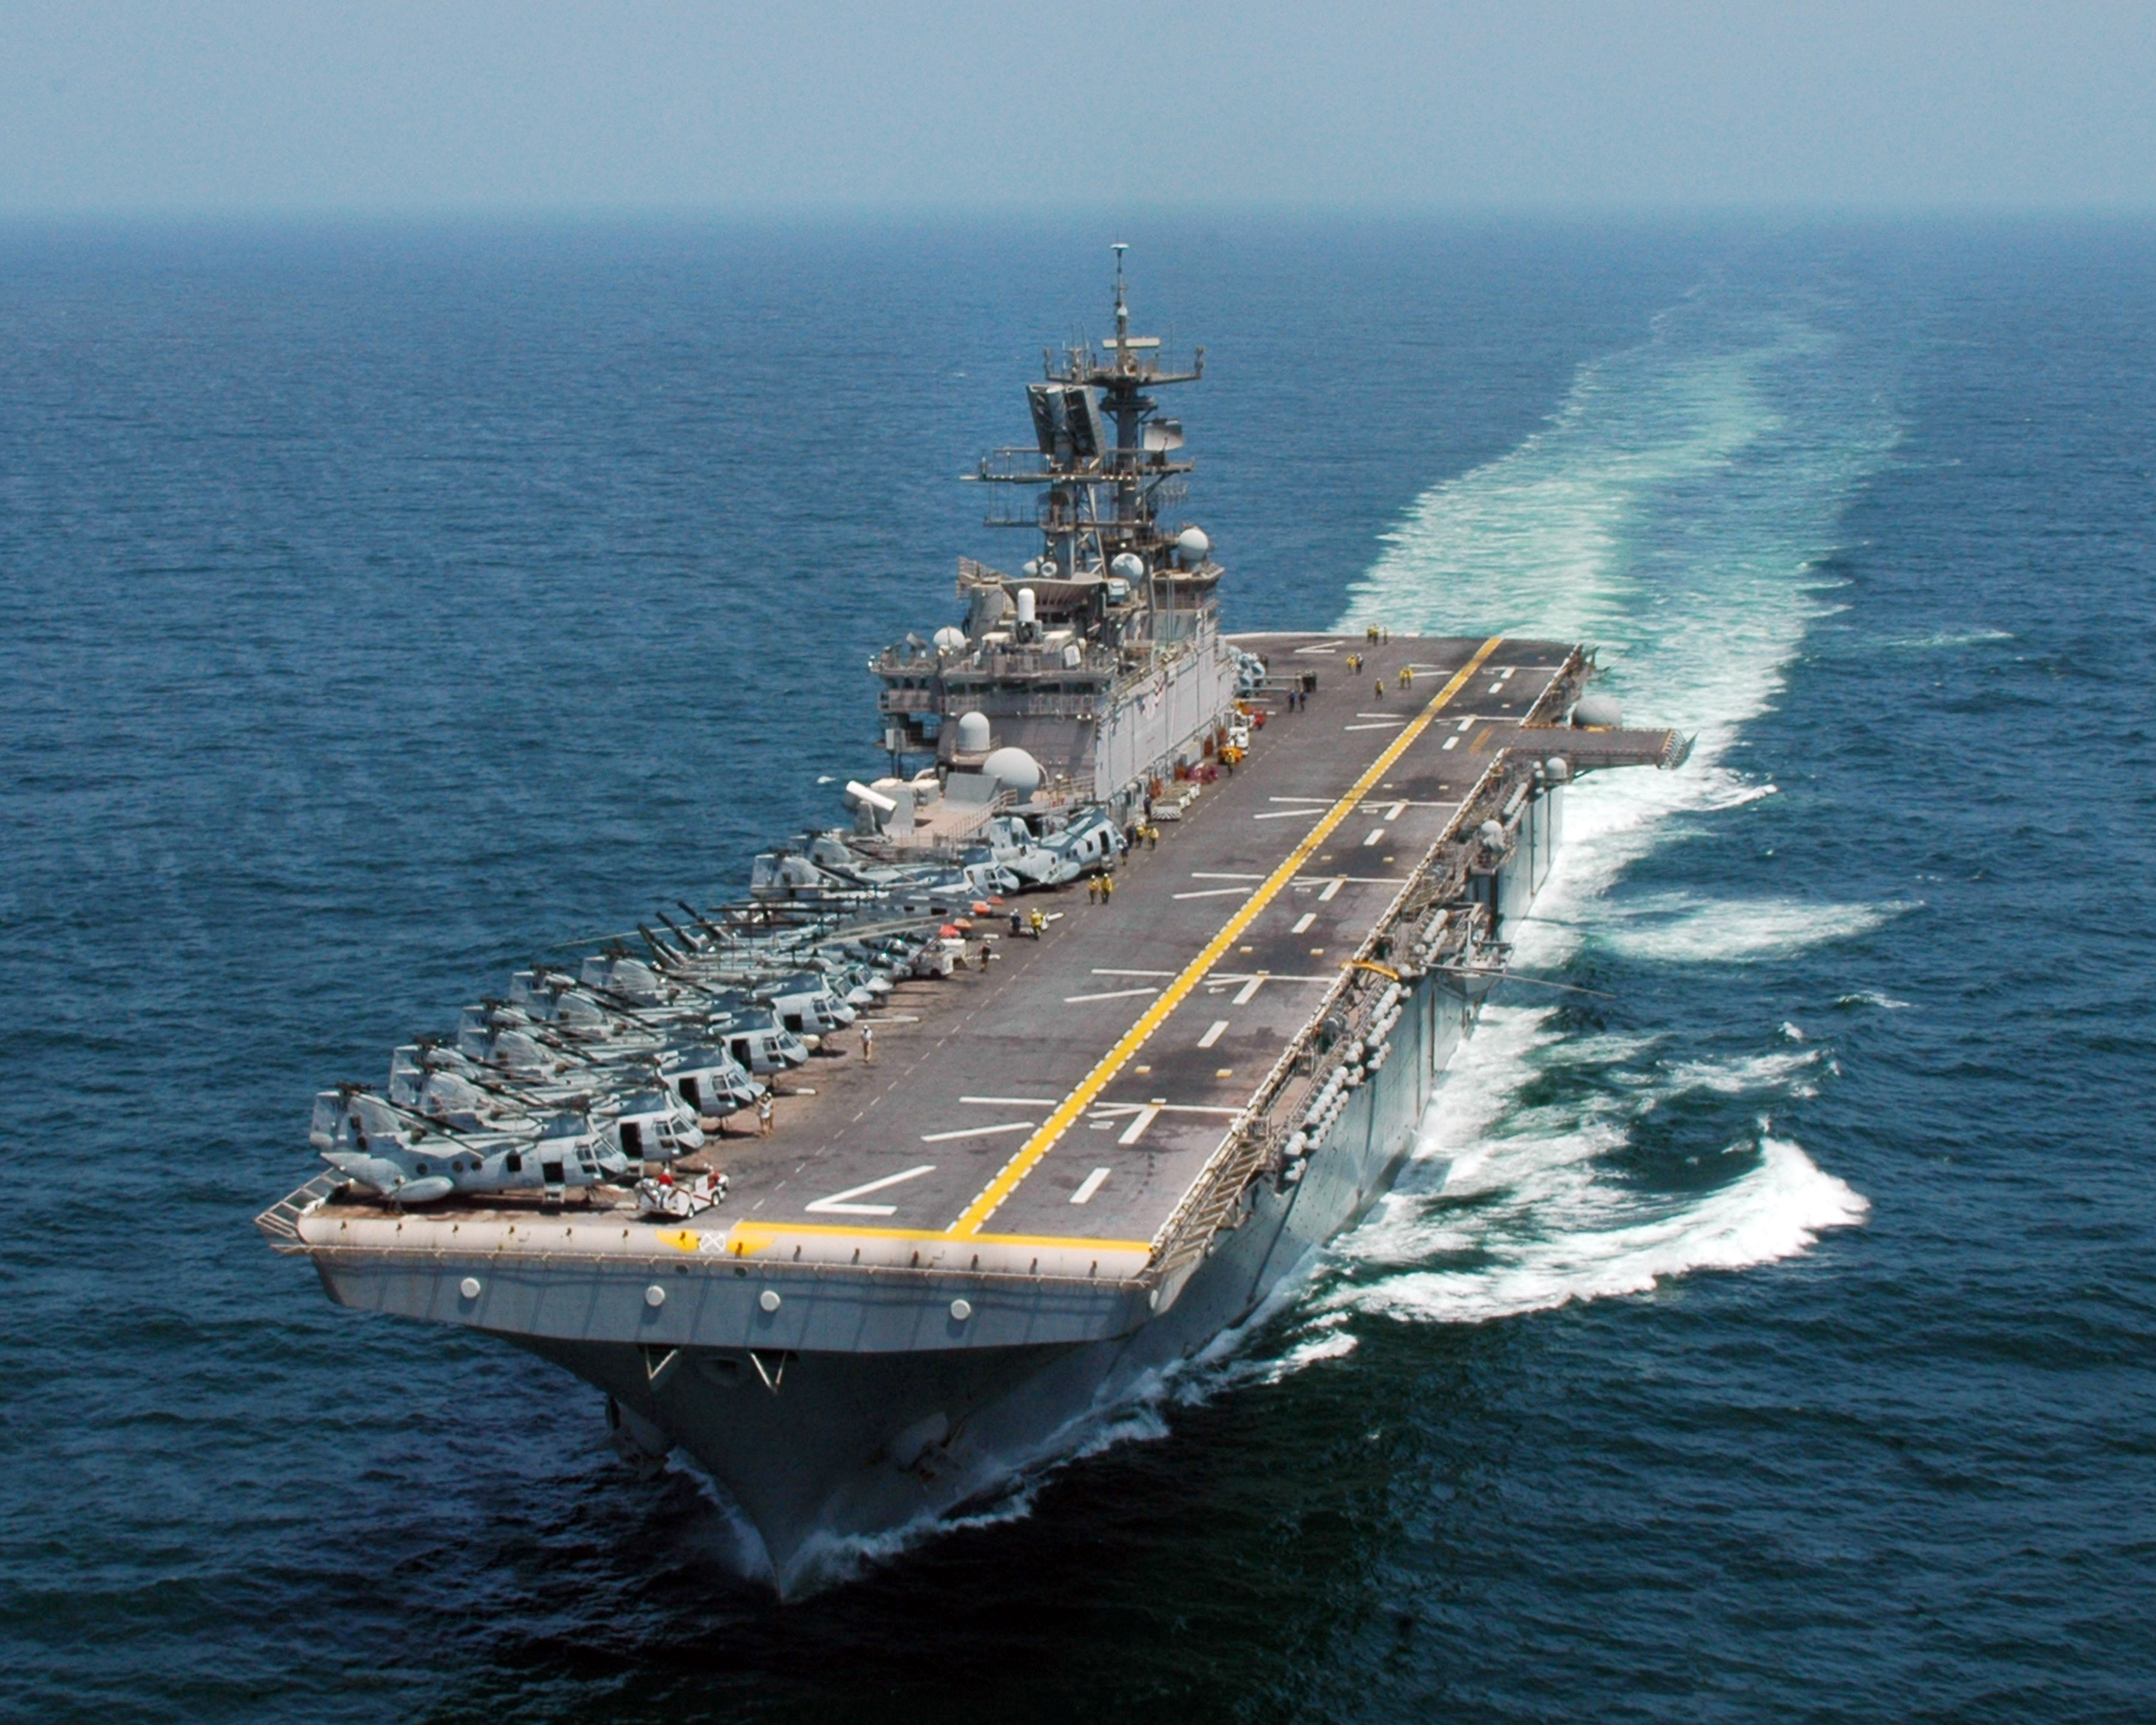 File:US Navy 060907-N-5588M-004 The amphibious assault ship USS Iwo Jima (LHD 7) conducts flight operations in the Arabian Sea.jpg - Wikimedia Commons